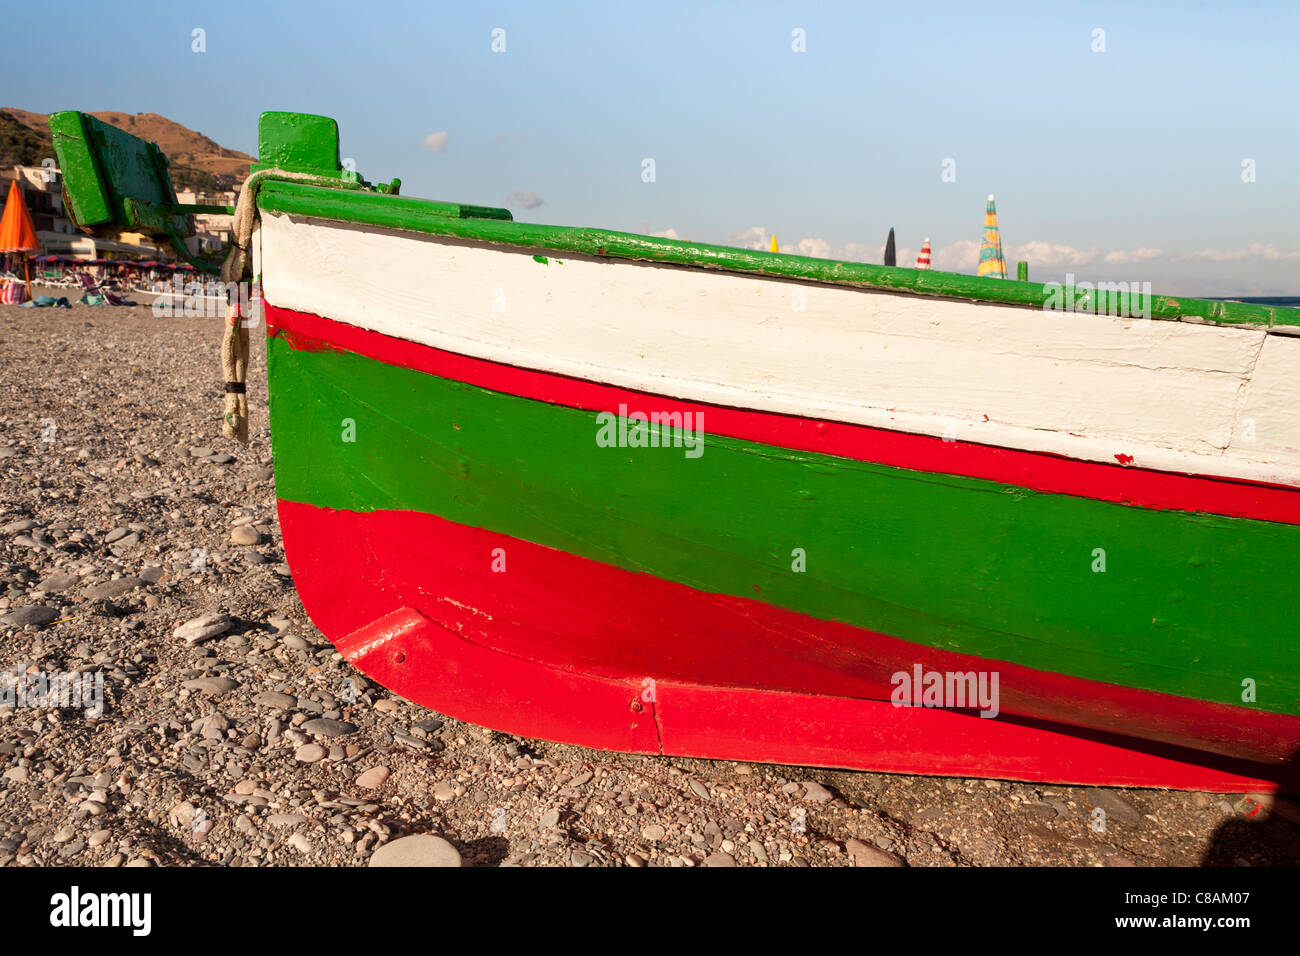 Colourful boat, Letojanni Beach, Letojanni, Sicily, Italy Stock Photo